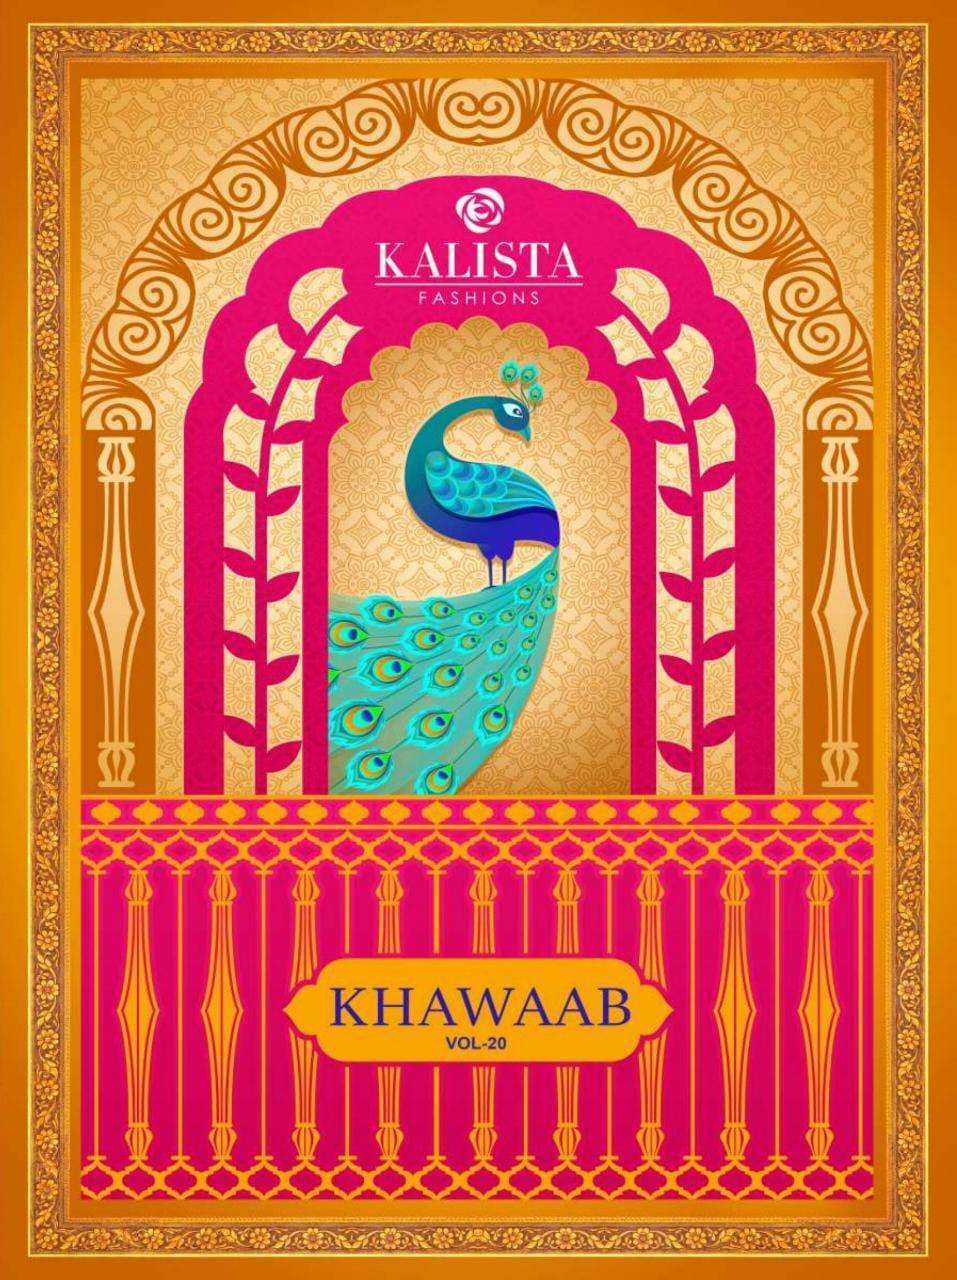 kalista khawaab vol 20 series 7018-7023 blooming georgette saree